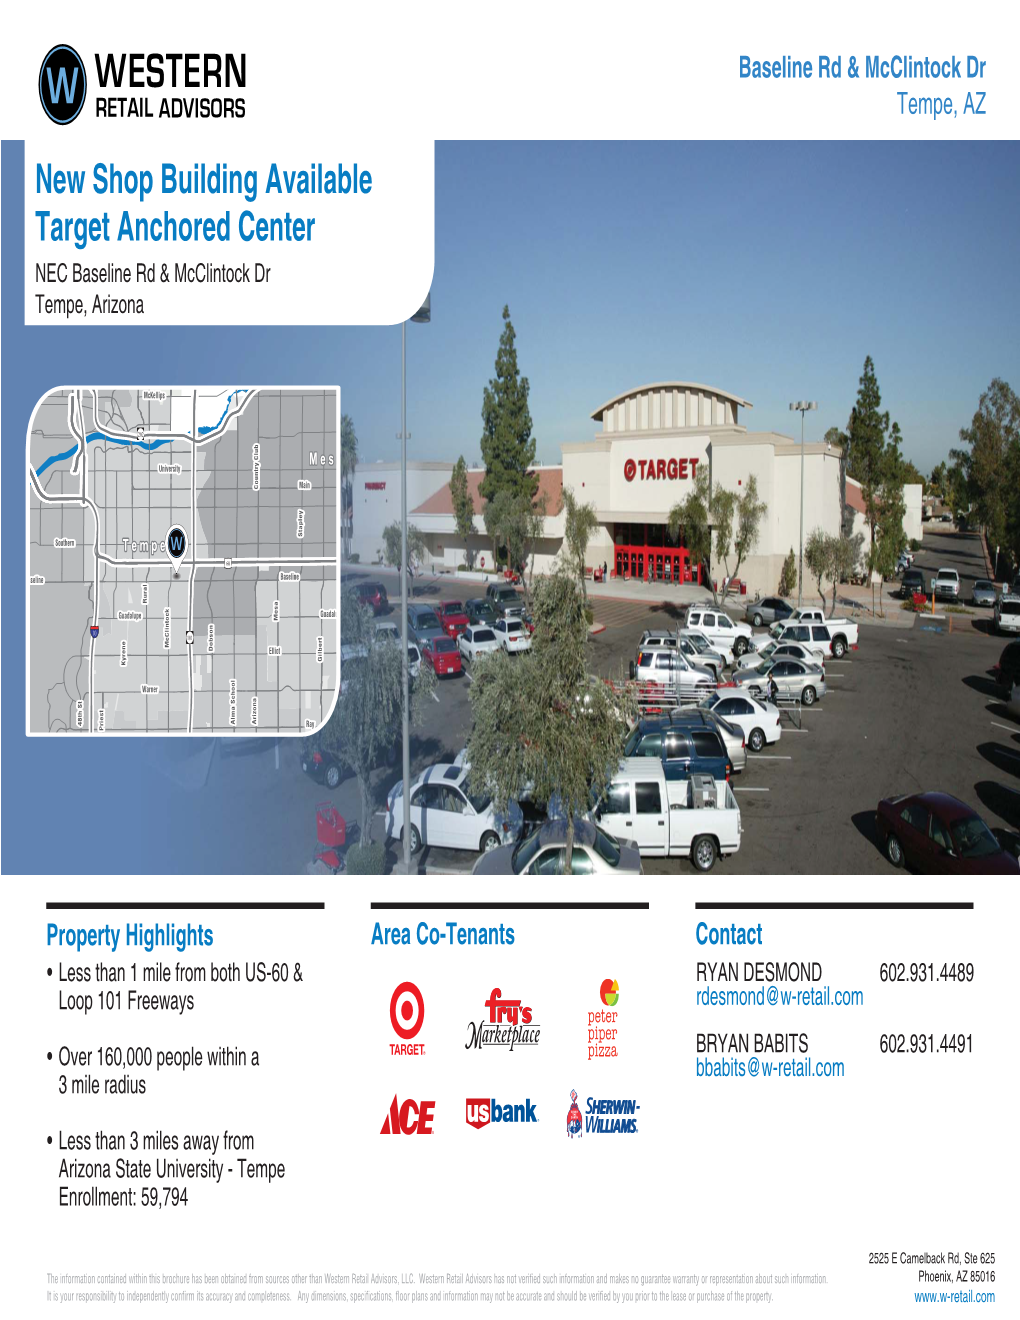 New Shop Building Available Target Anchored Center NEC Baseline Rd & Mcclintock Dr Tempe, Arizona